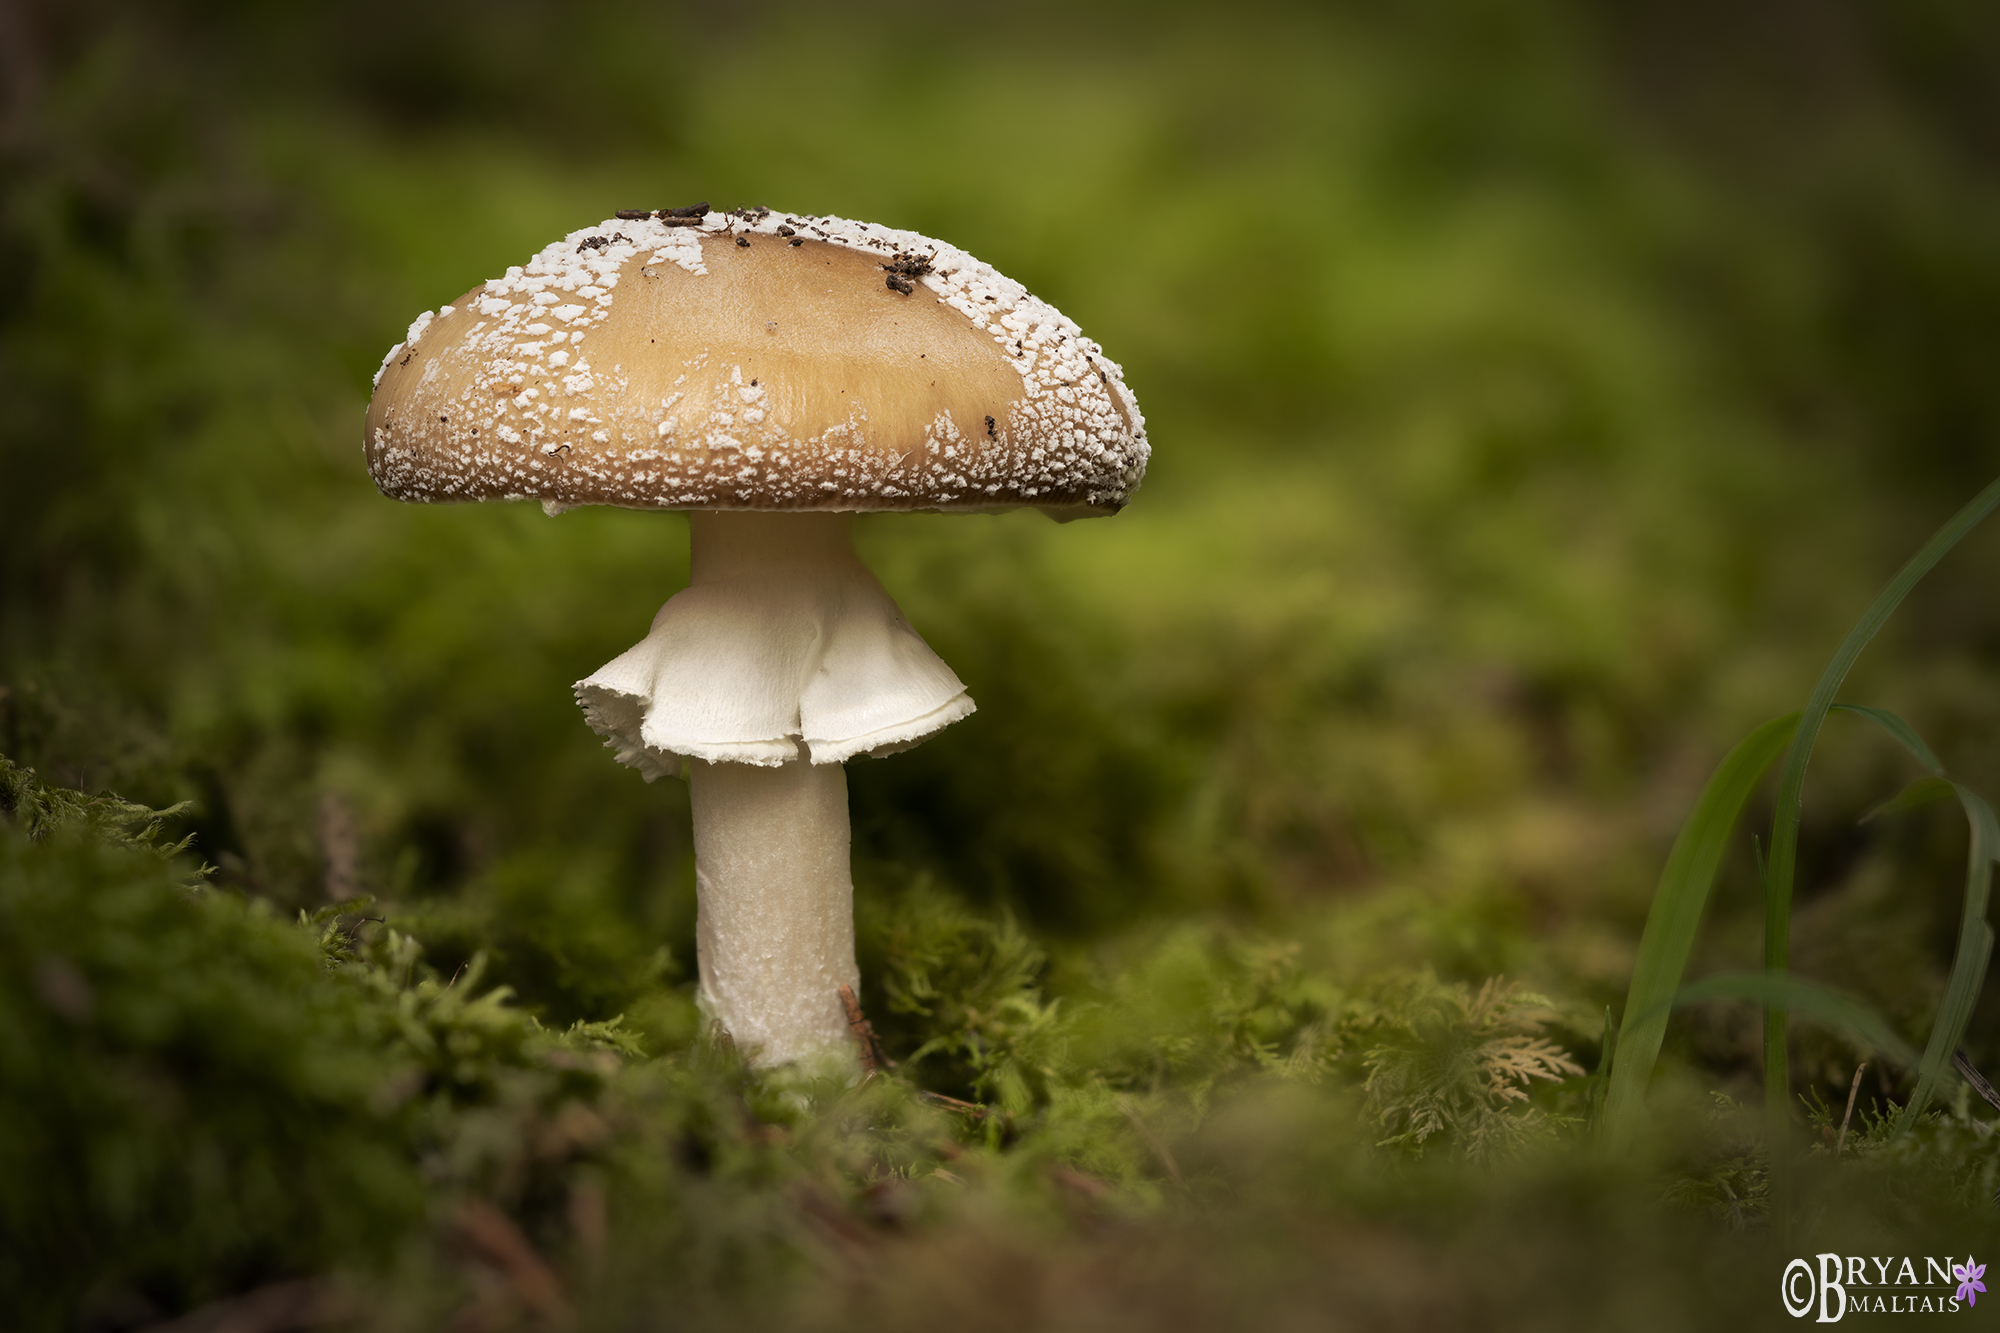 pantherpilz mushroom schurwald